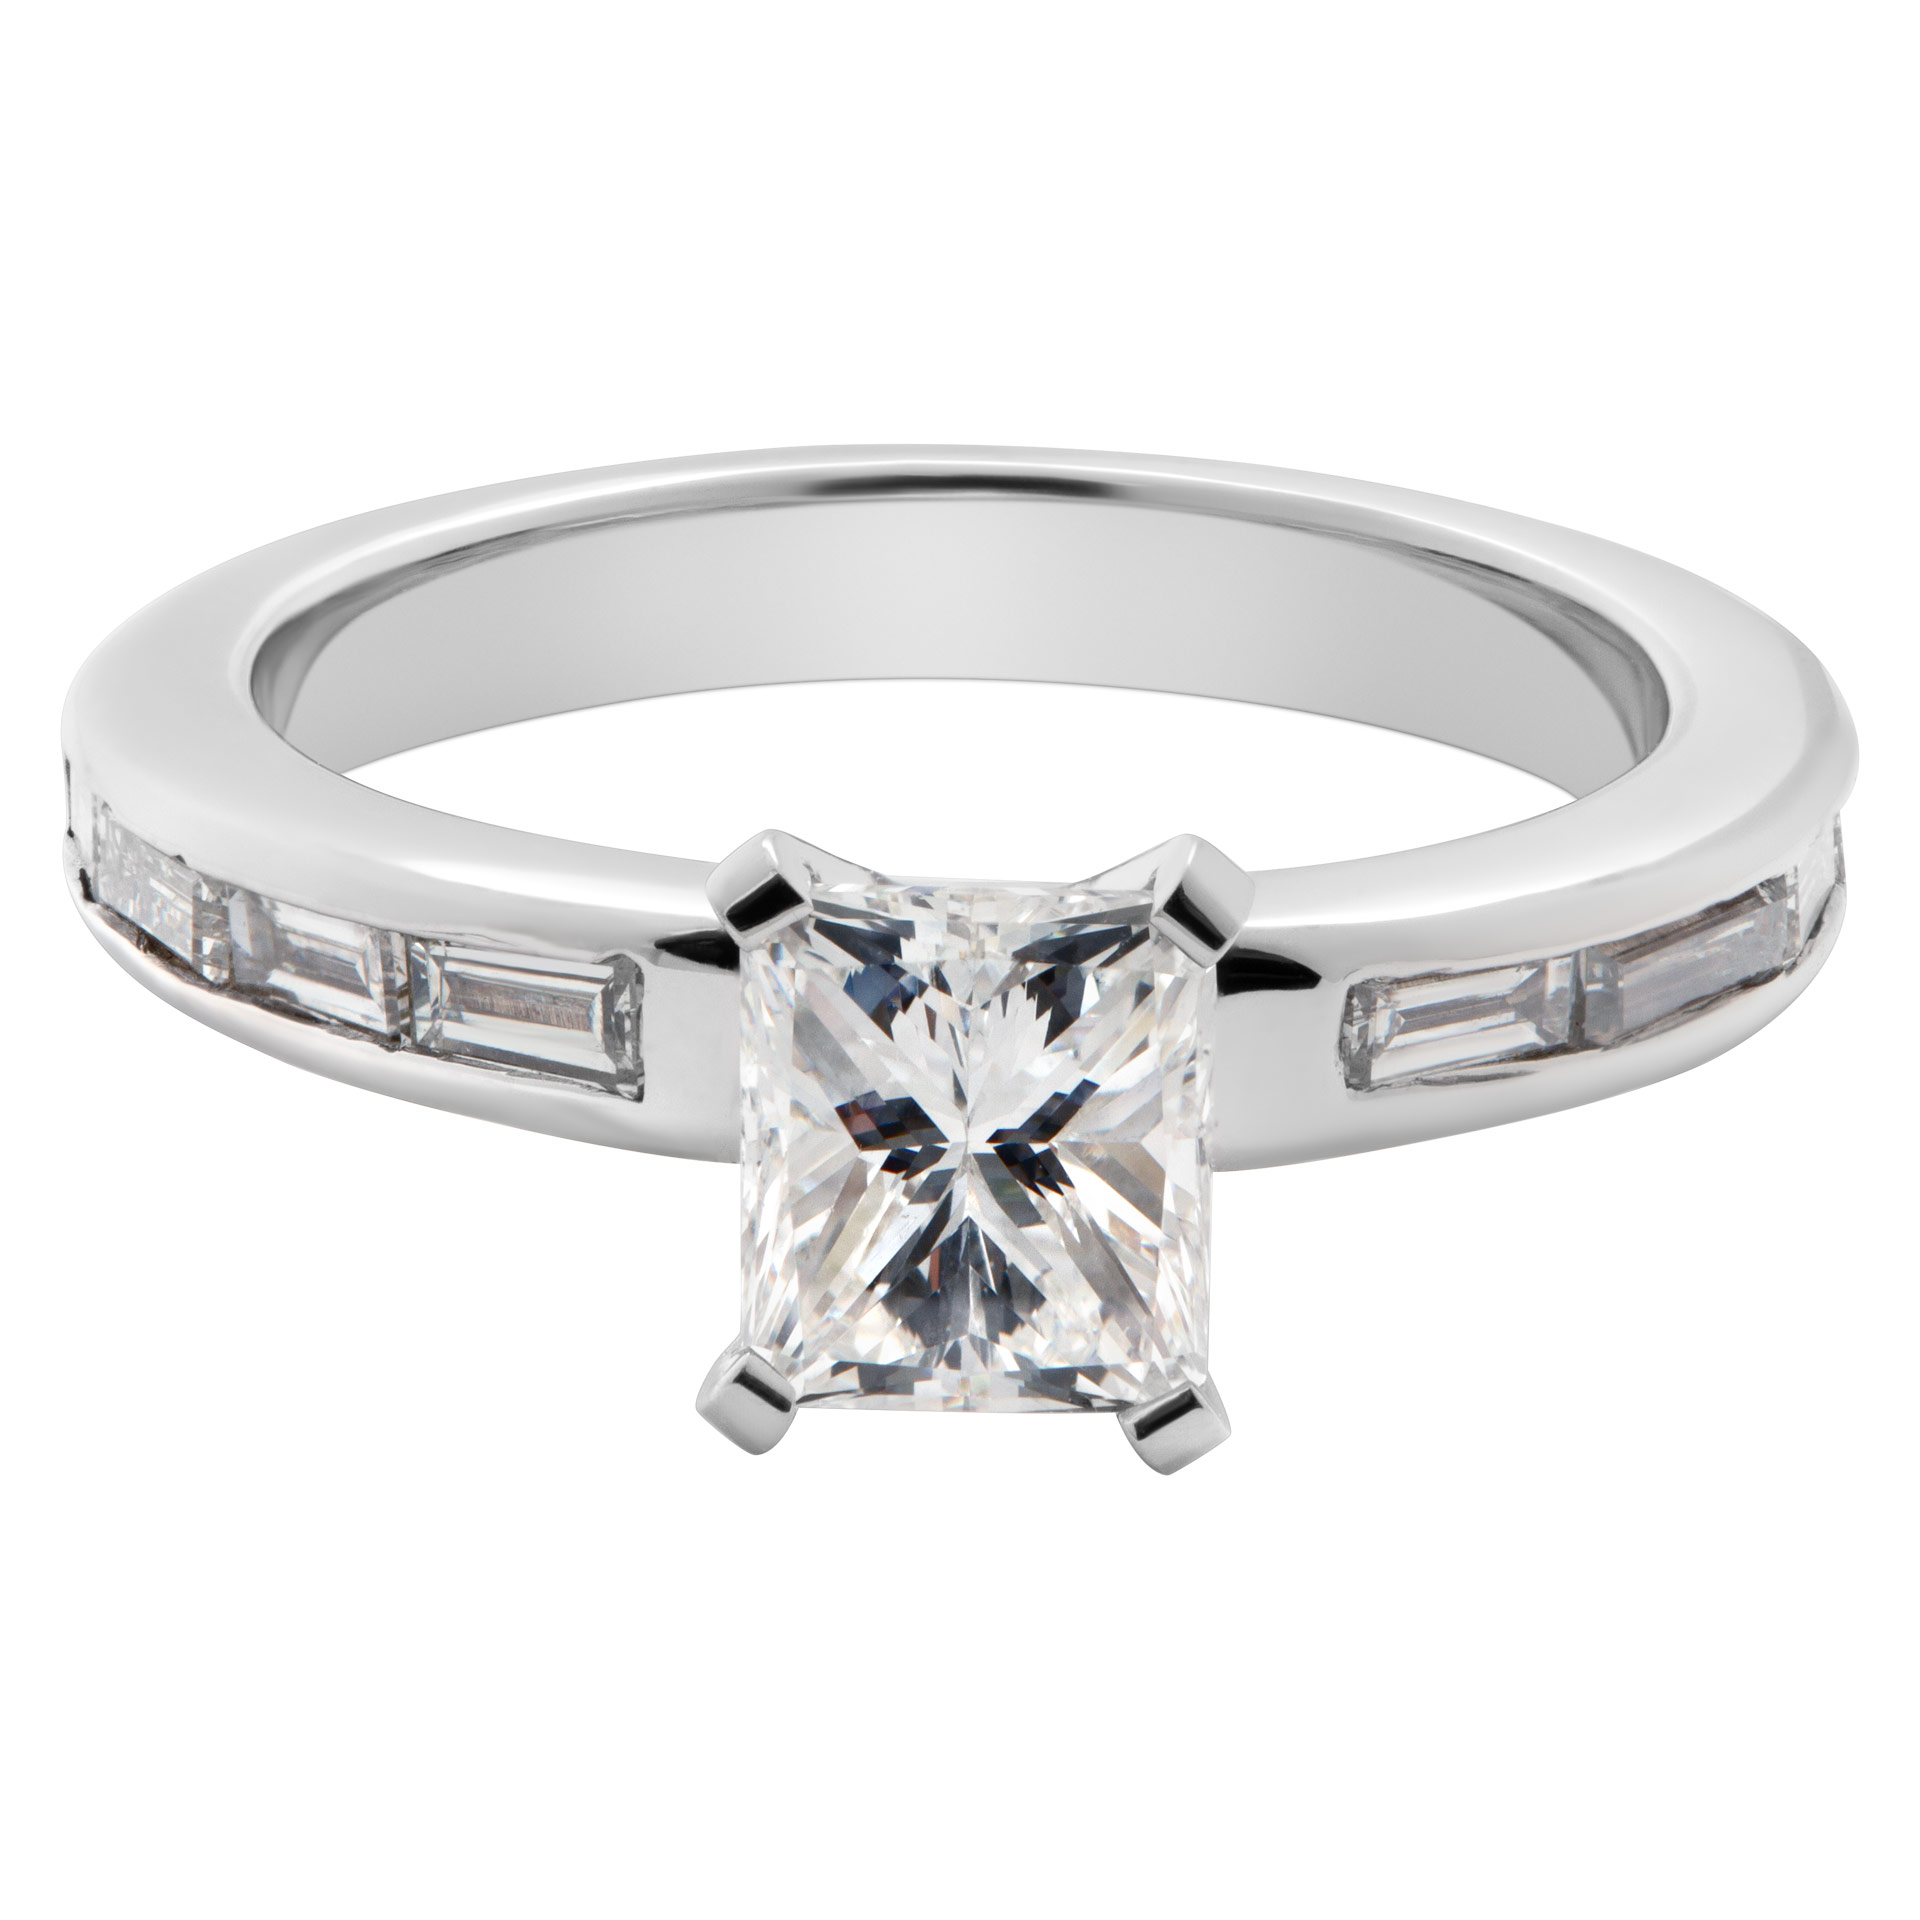 GIA certified cut-cornered rectangular modified brilliant cut diamond ring